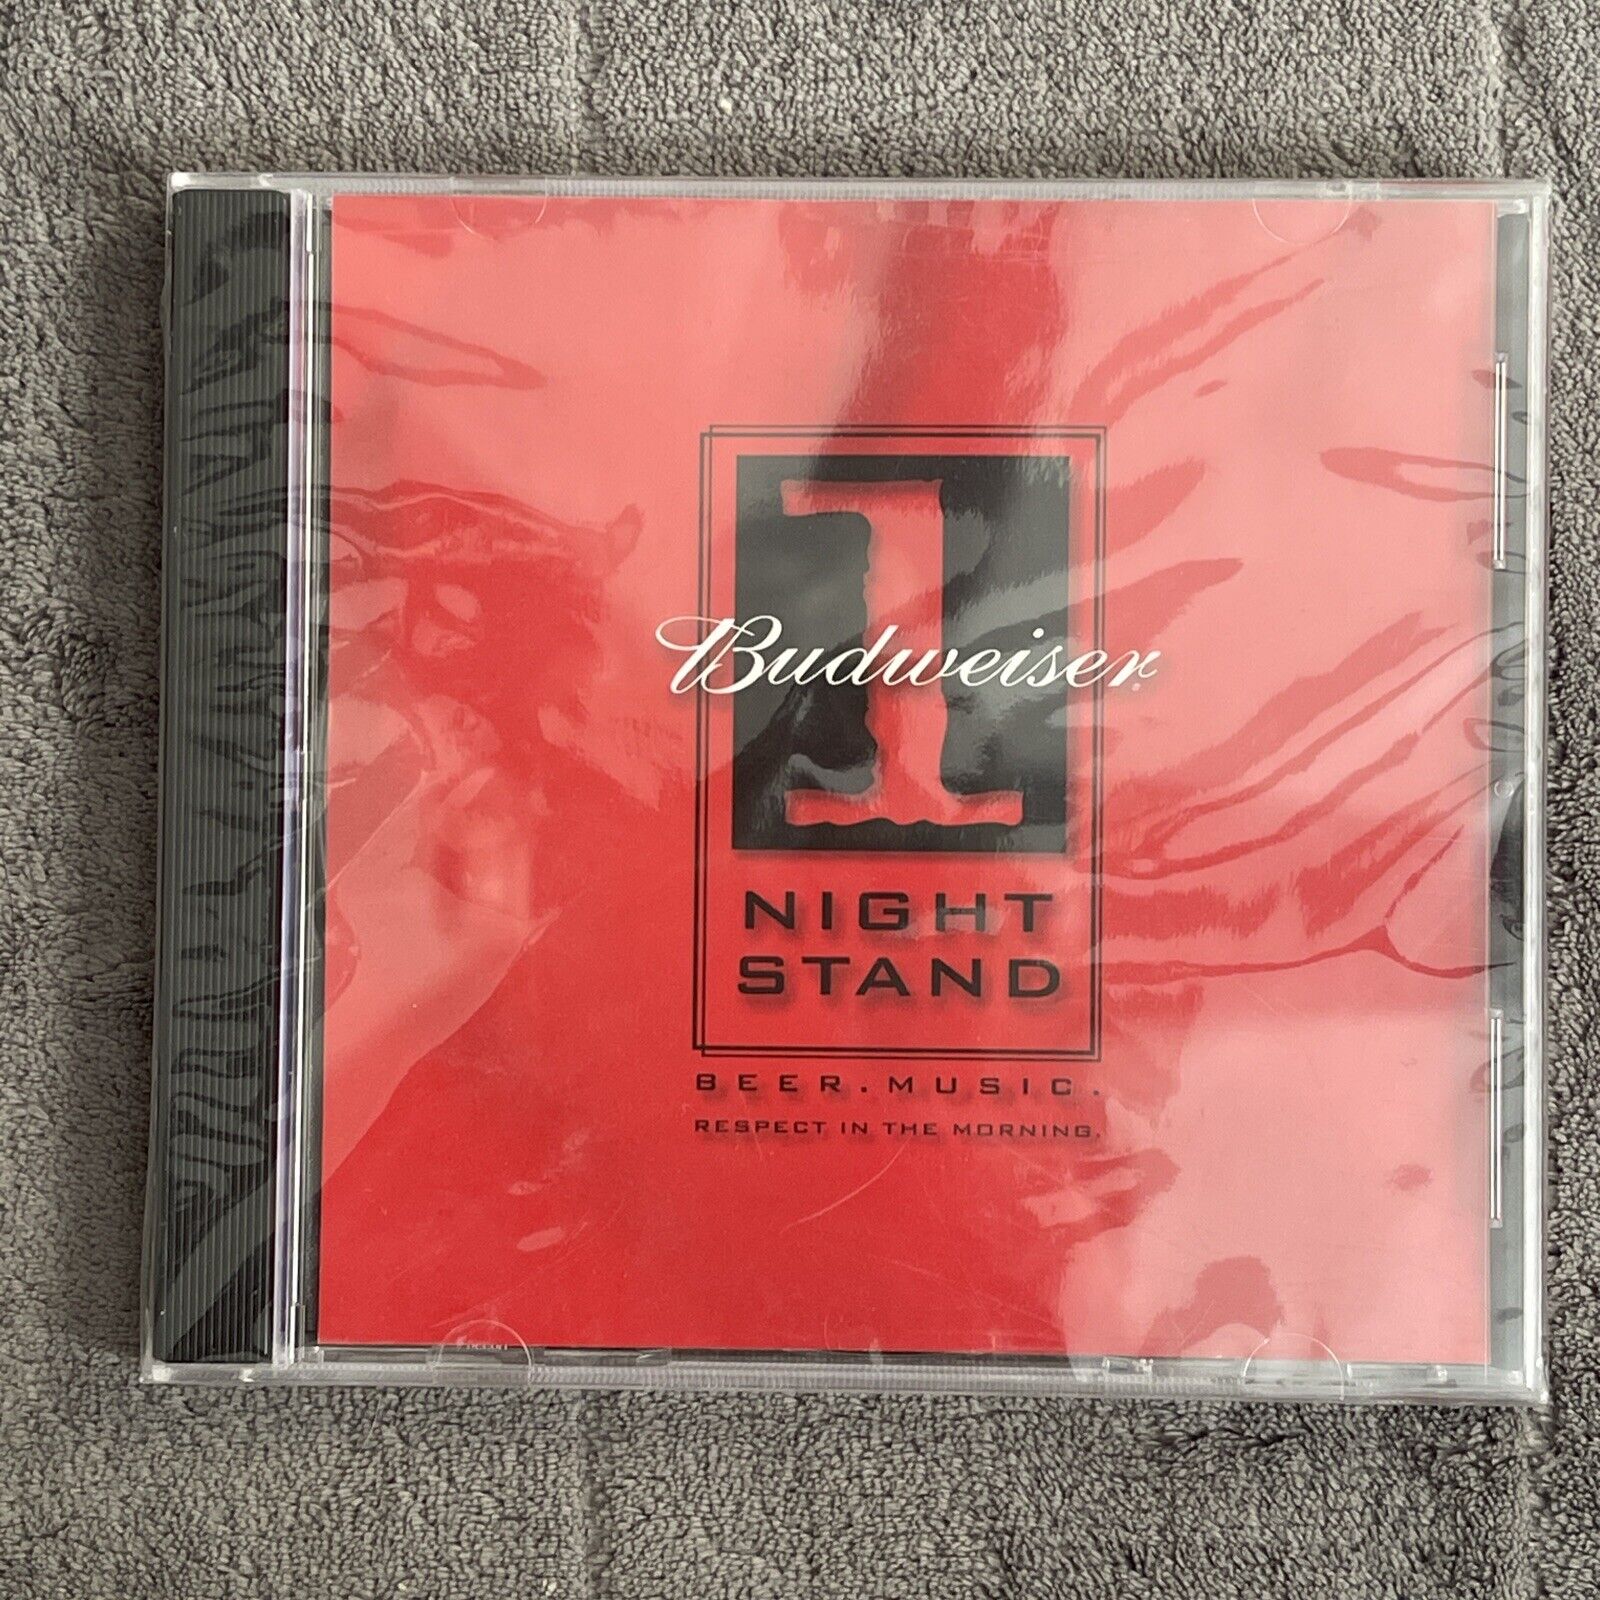 Budweiser Presents: One Night Stand - Beer Music (CD 2002) Alternative Rock